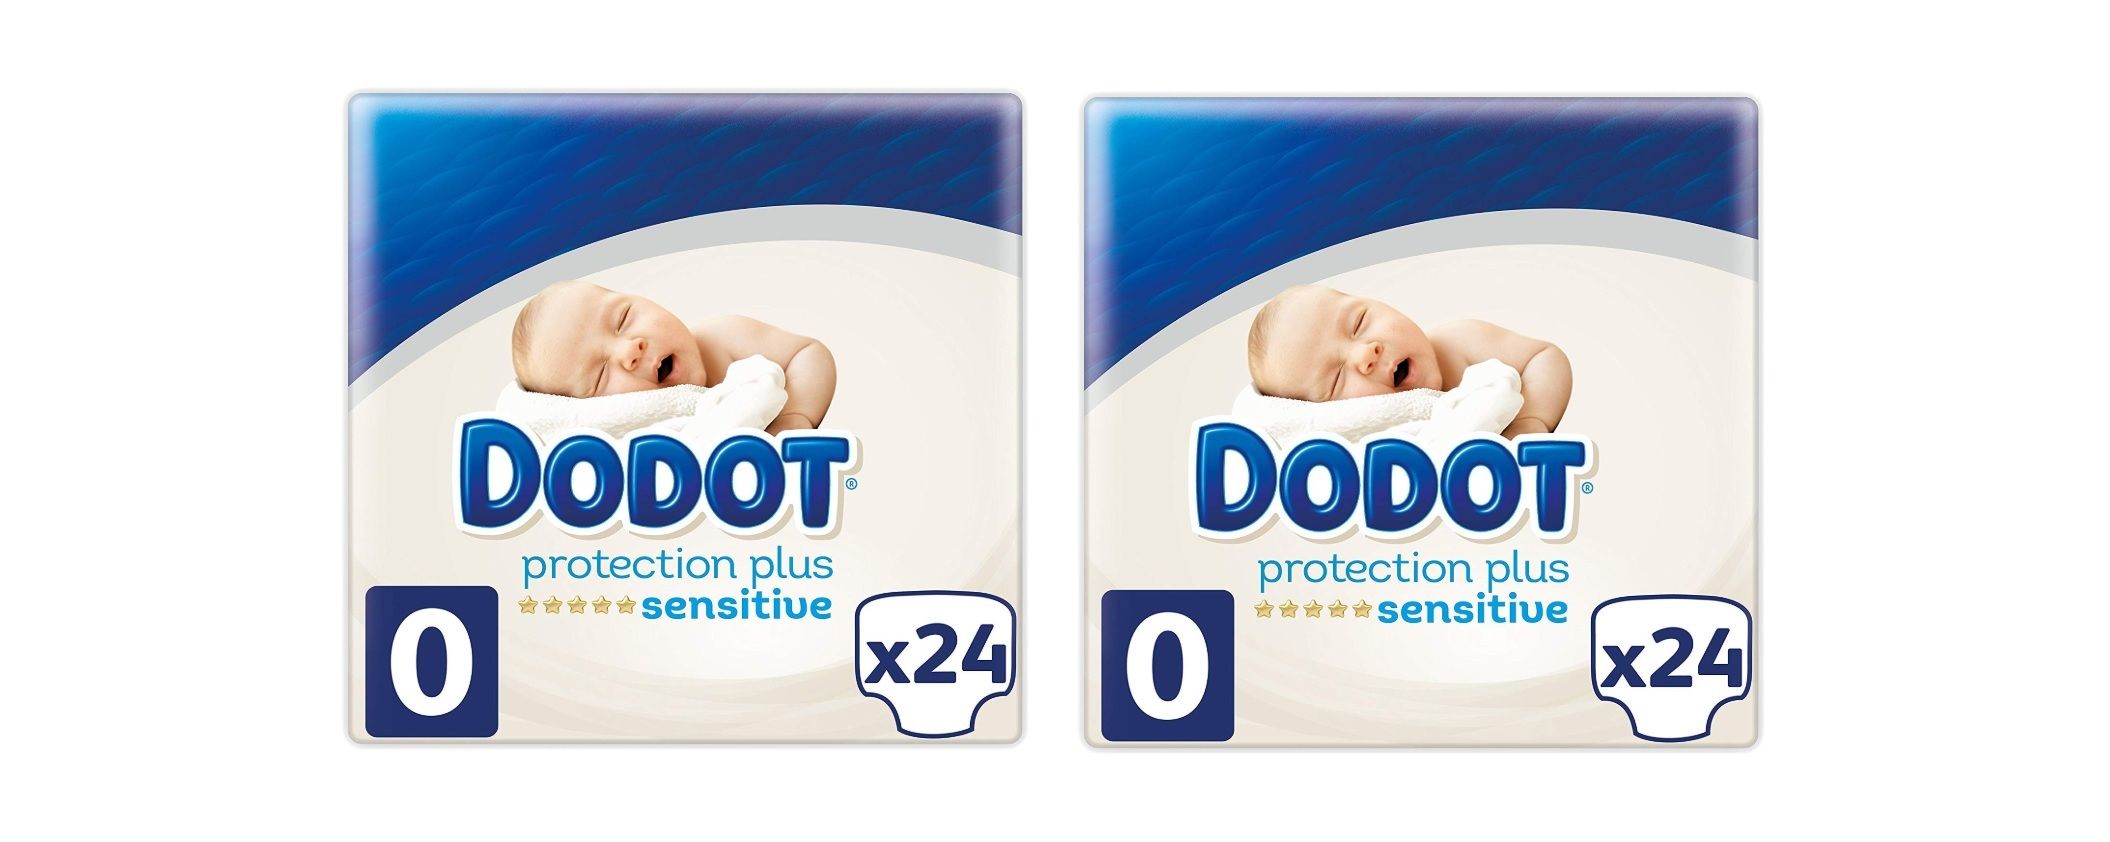 ¡Chollo! Pack 48 unidades Dodot Protection Plus Sensitive Pañales Talla 0 por sólo 6,88€